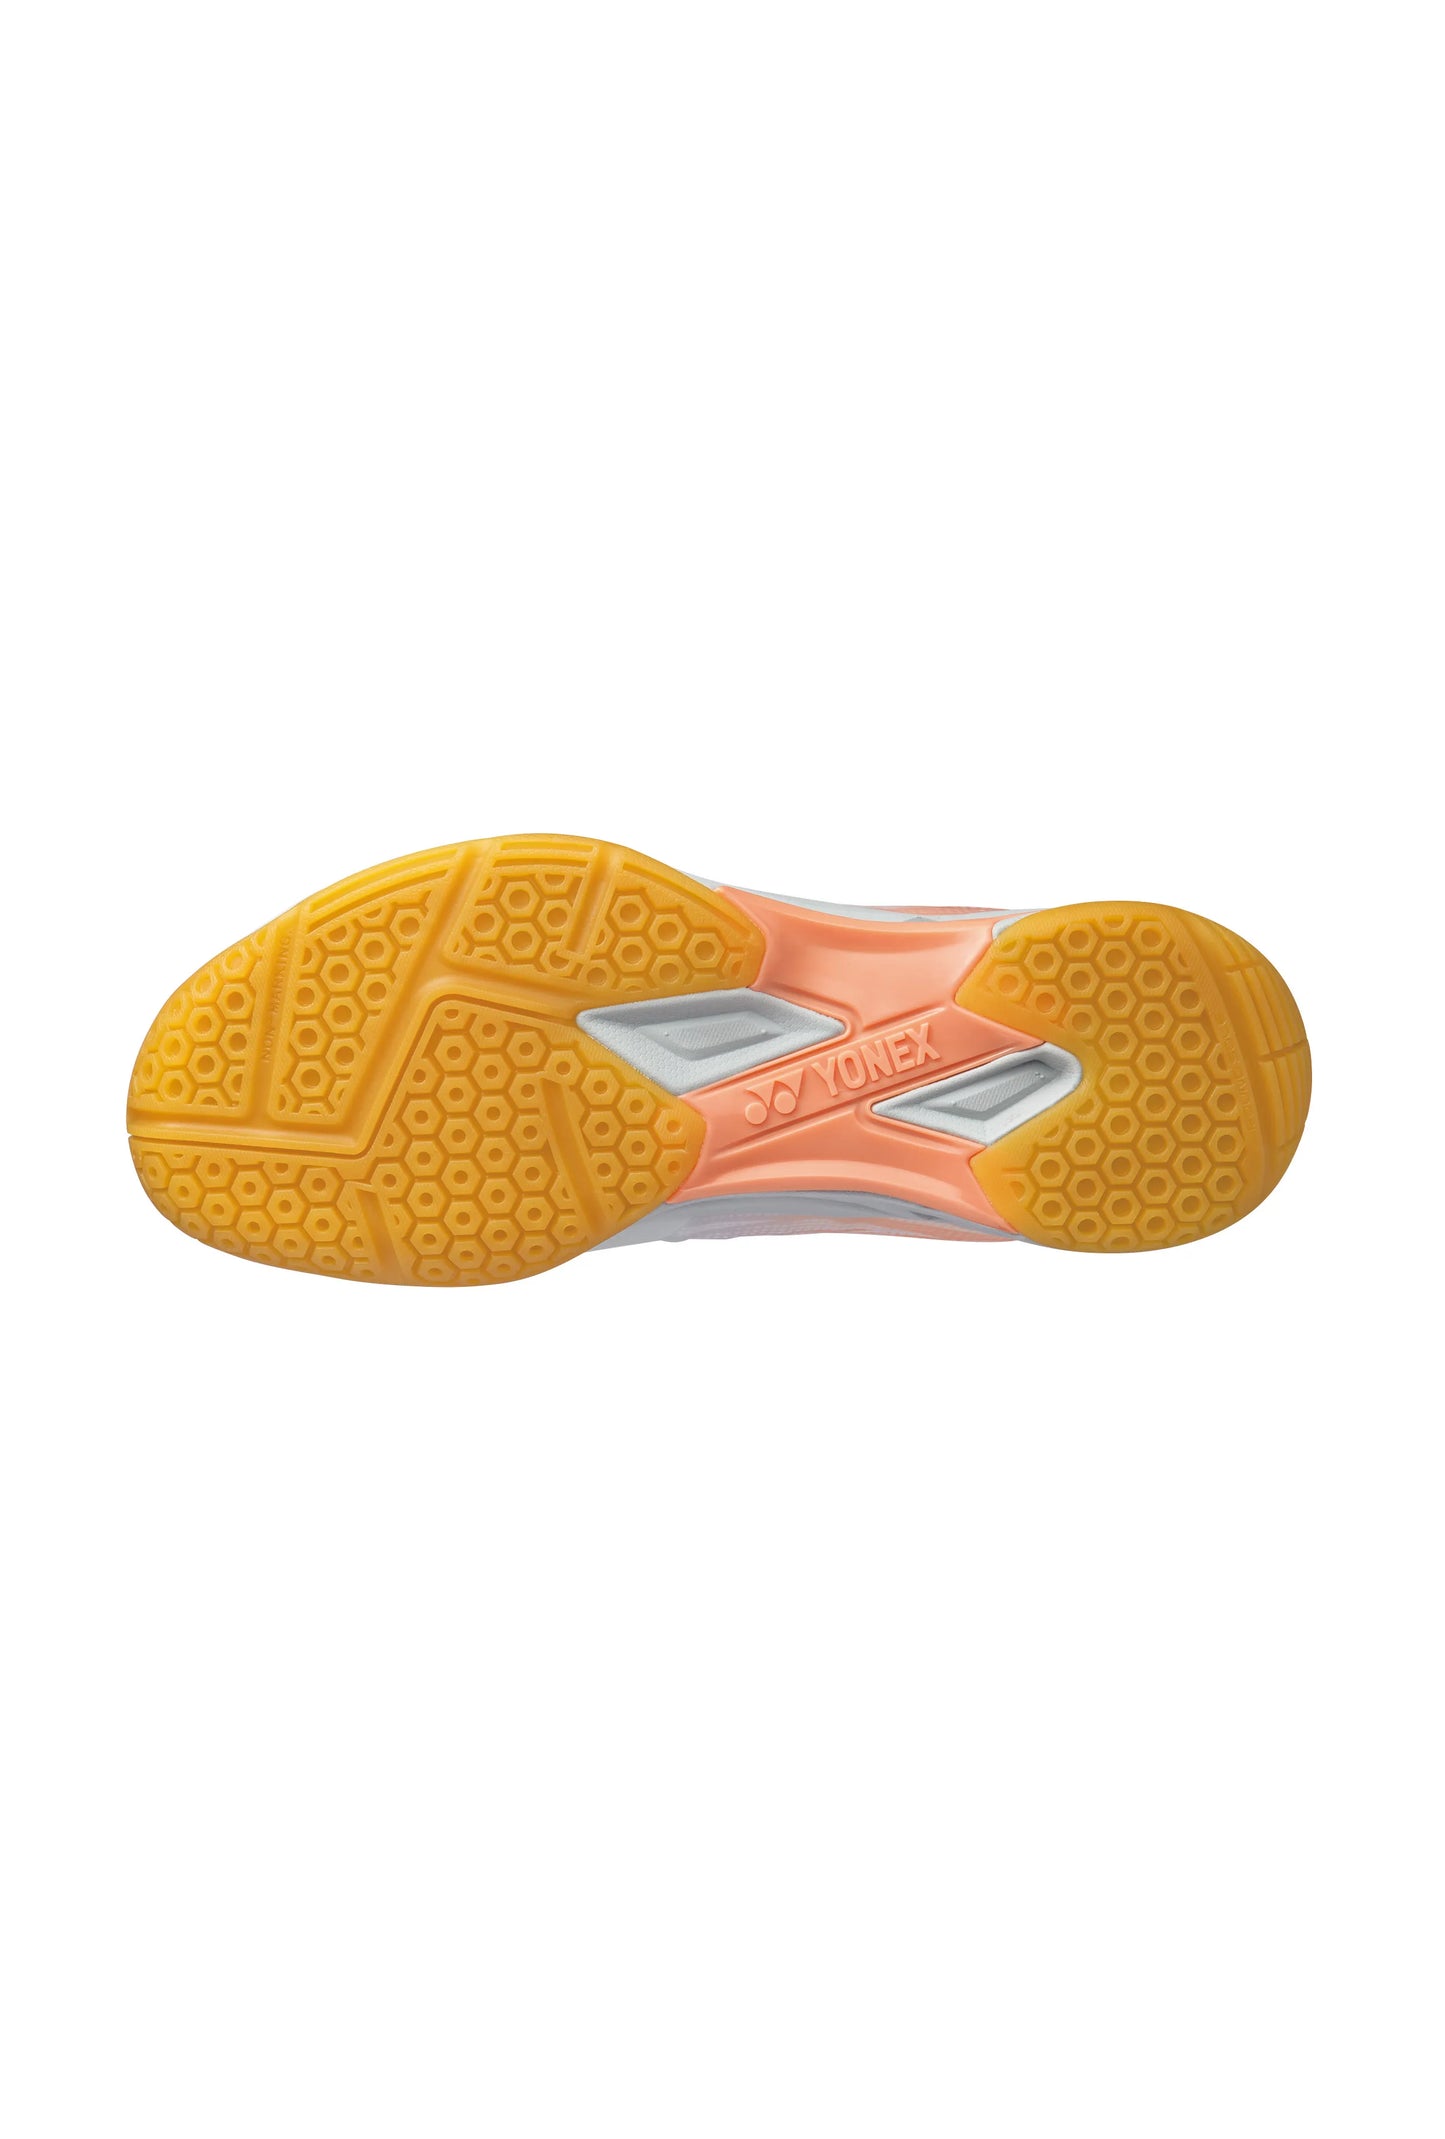 YONEX Badminton Shoes POWER CUSHION AERUS X2 WOMEN - Max Sports